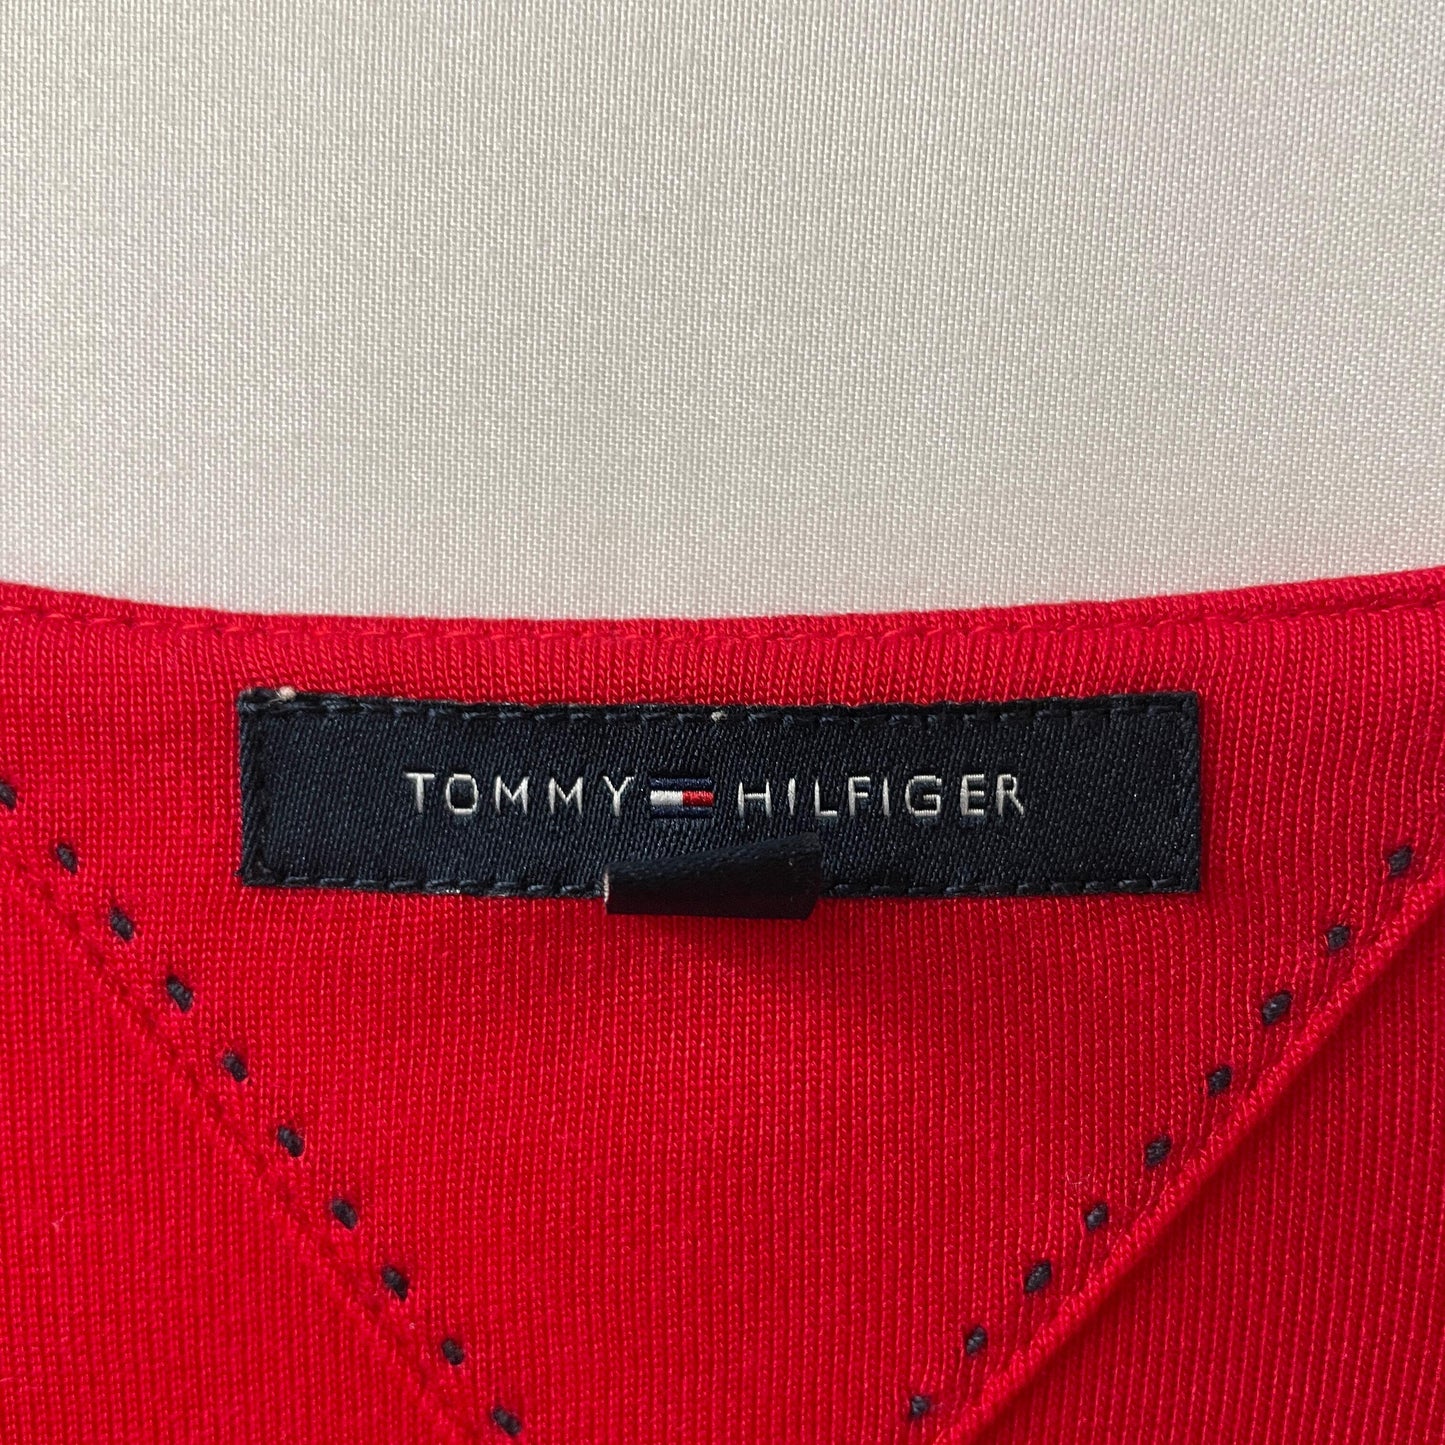 Tommy hilfiger Tommy Hilfiger dress